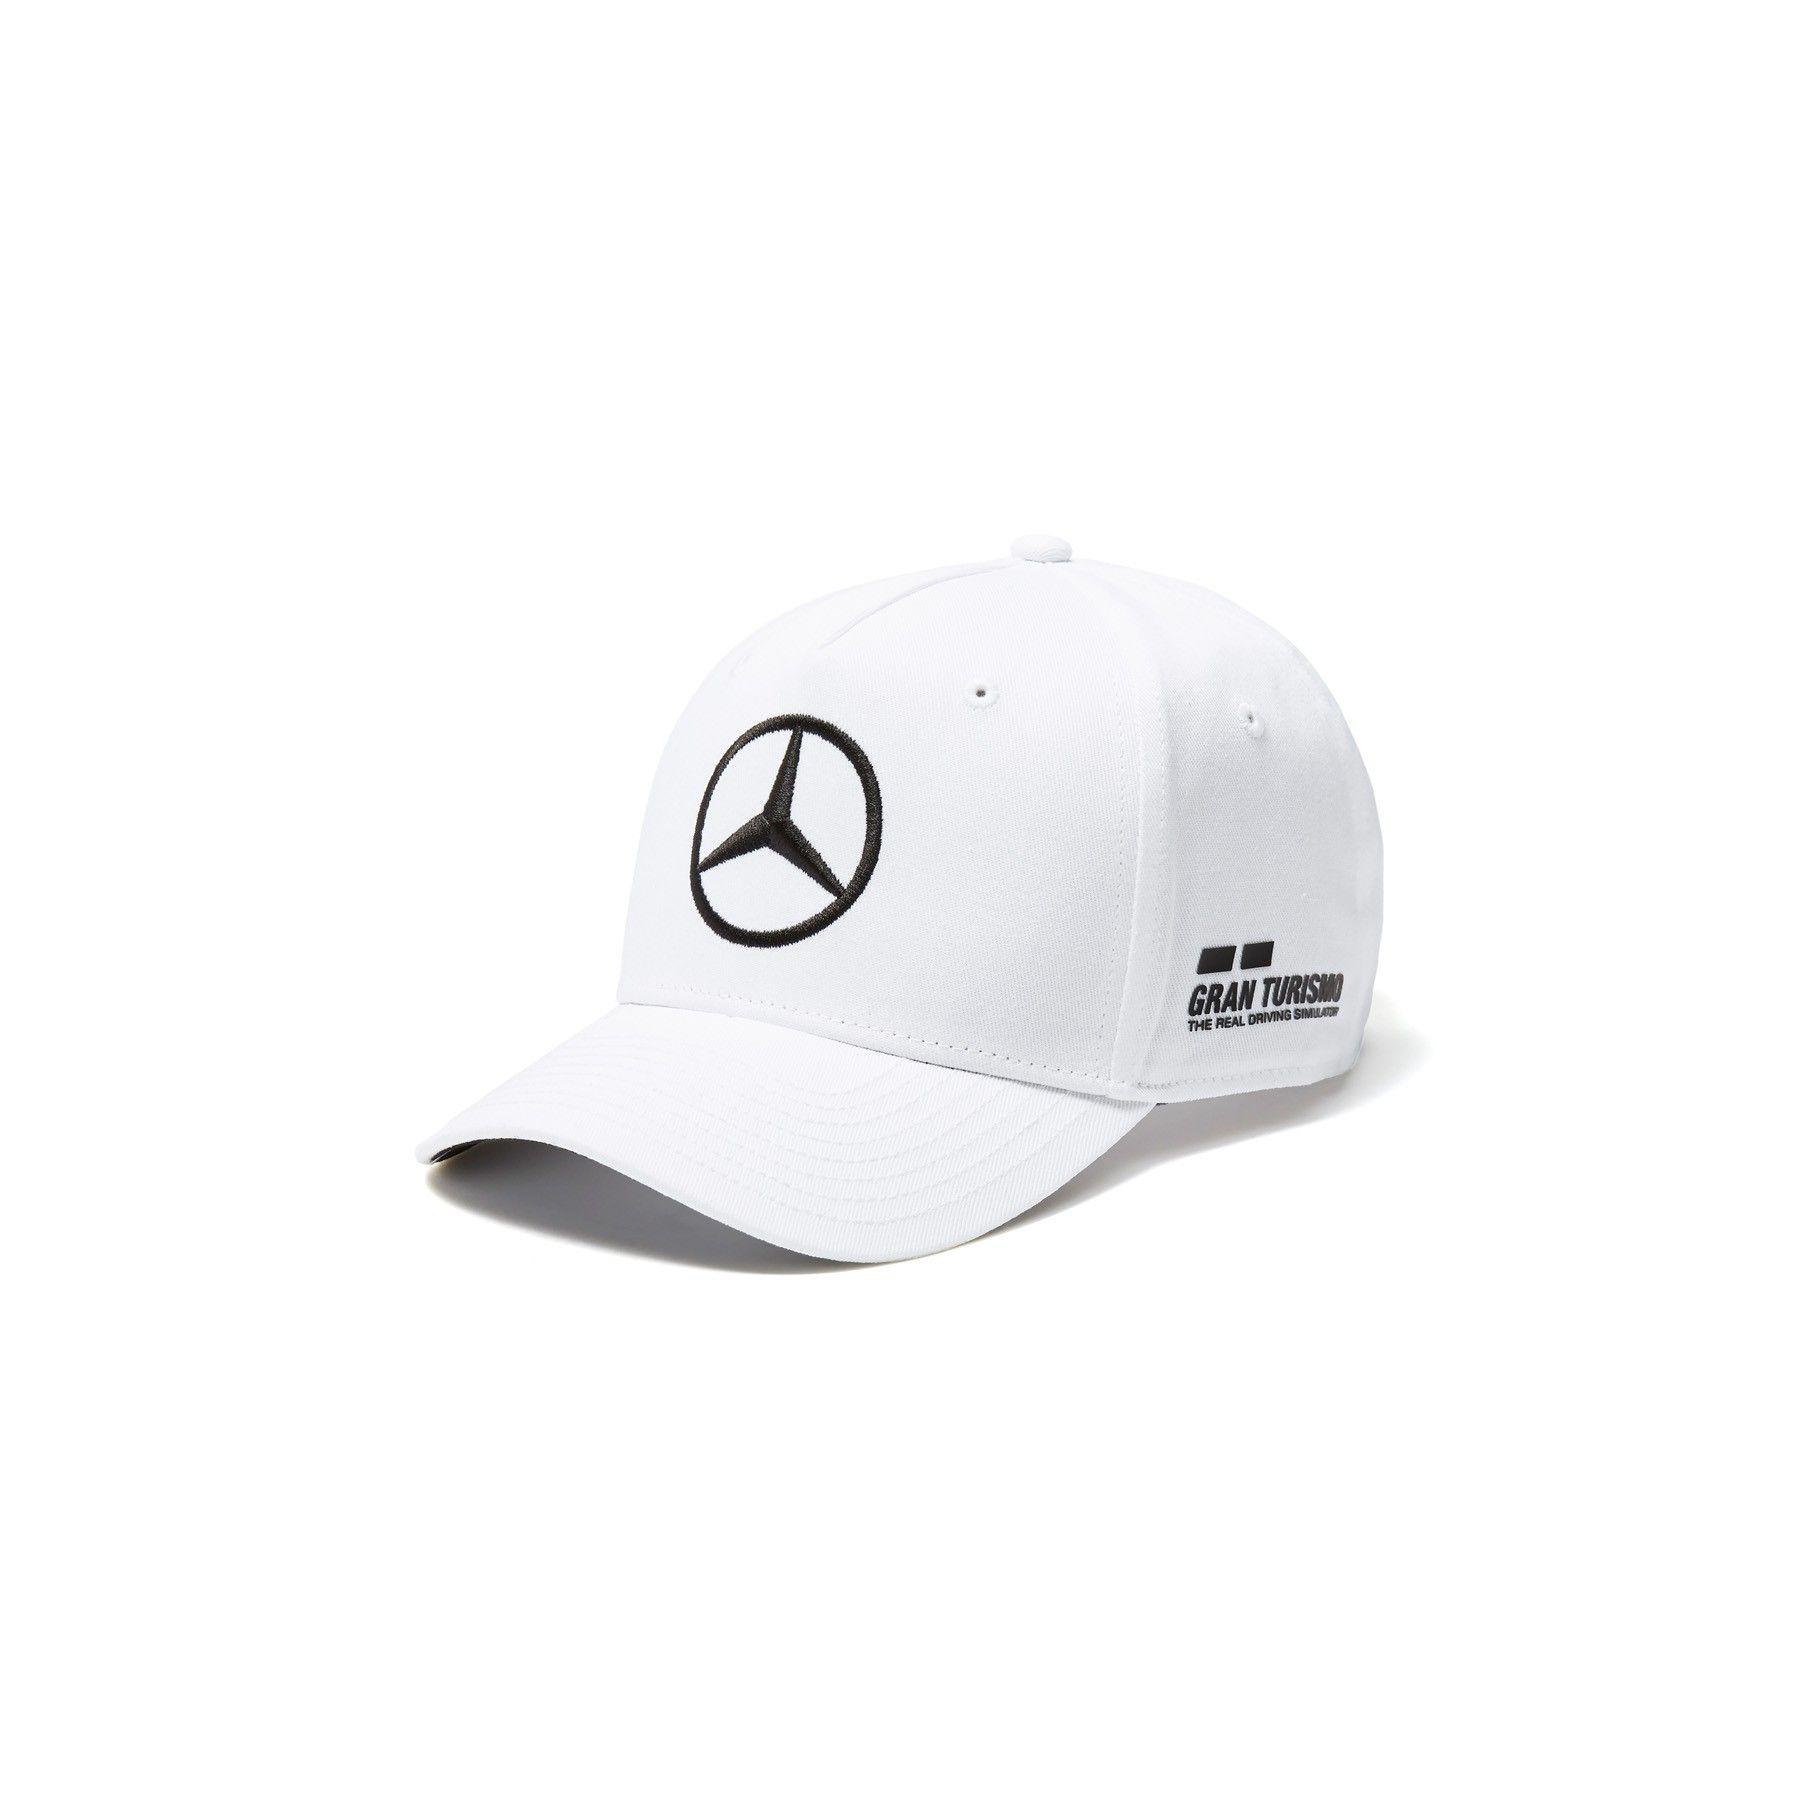 2018 Mercedes Logo - Mercedes-AMG Petronas Motorsport 2018 Lewis Hamilton Baseball Cap White